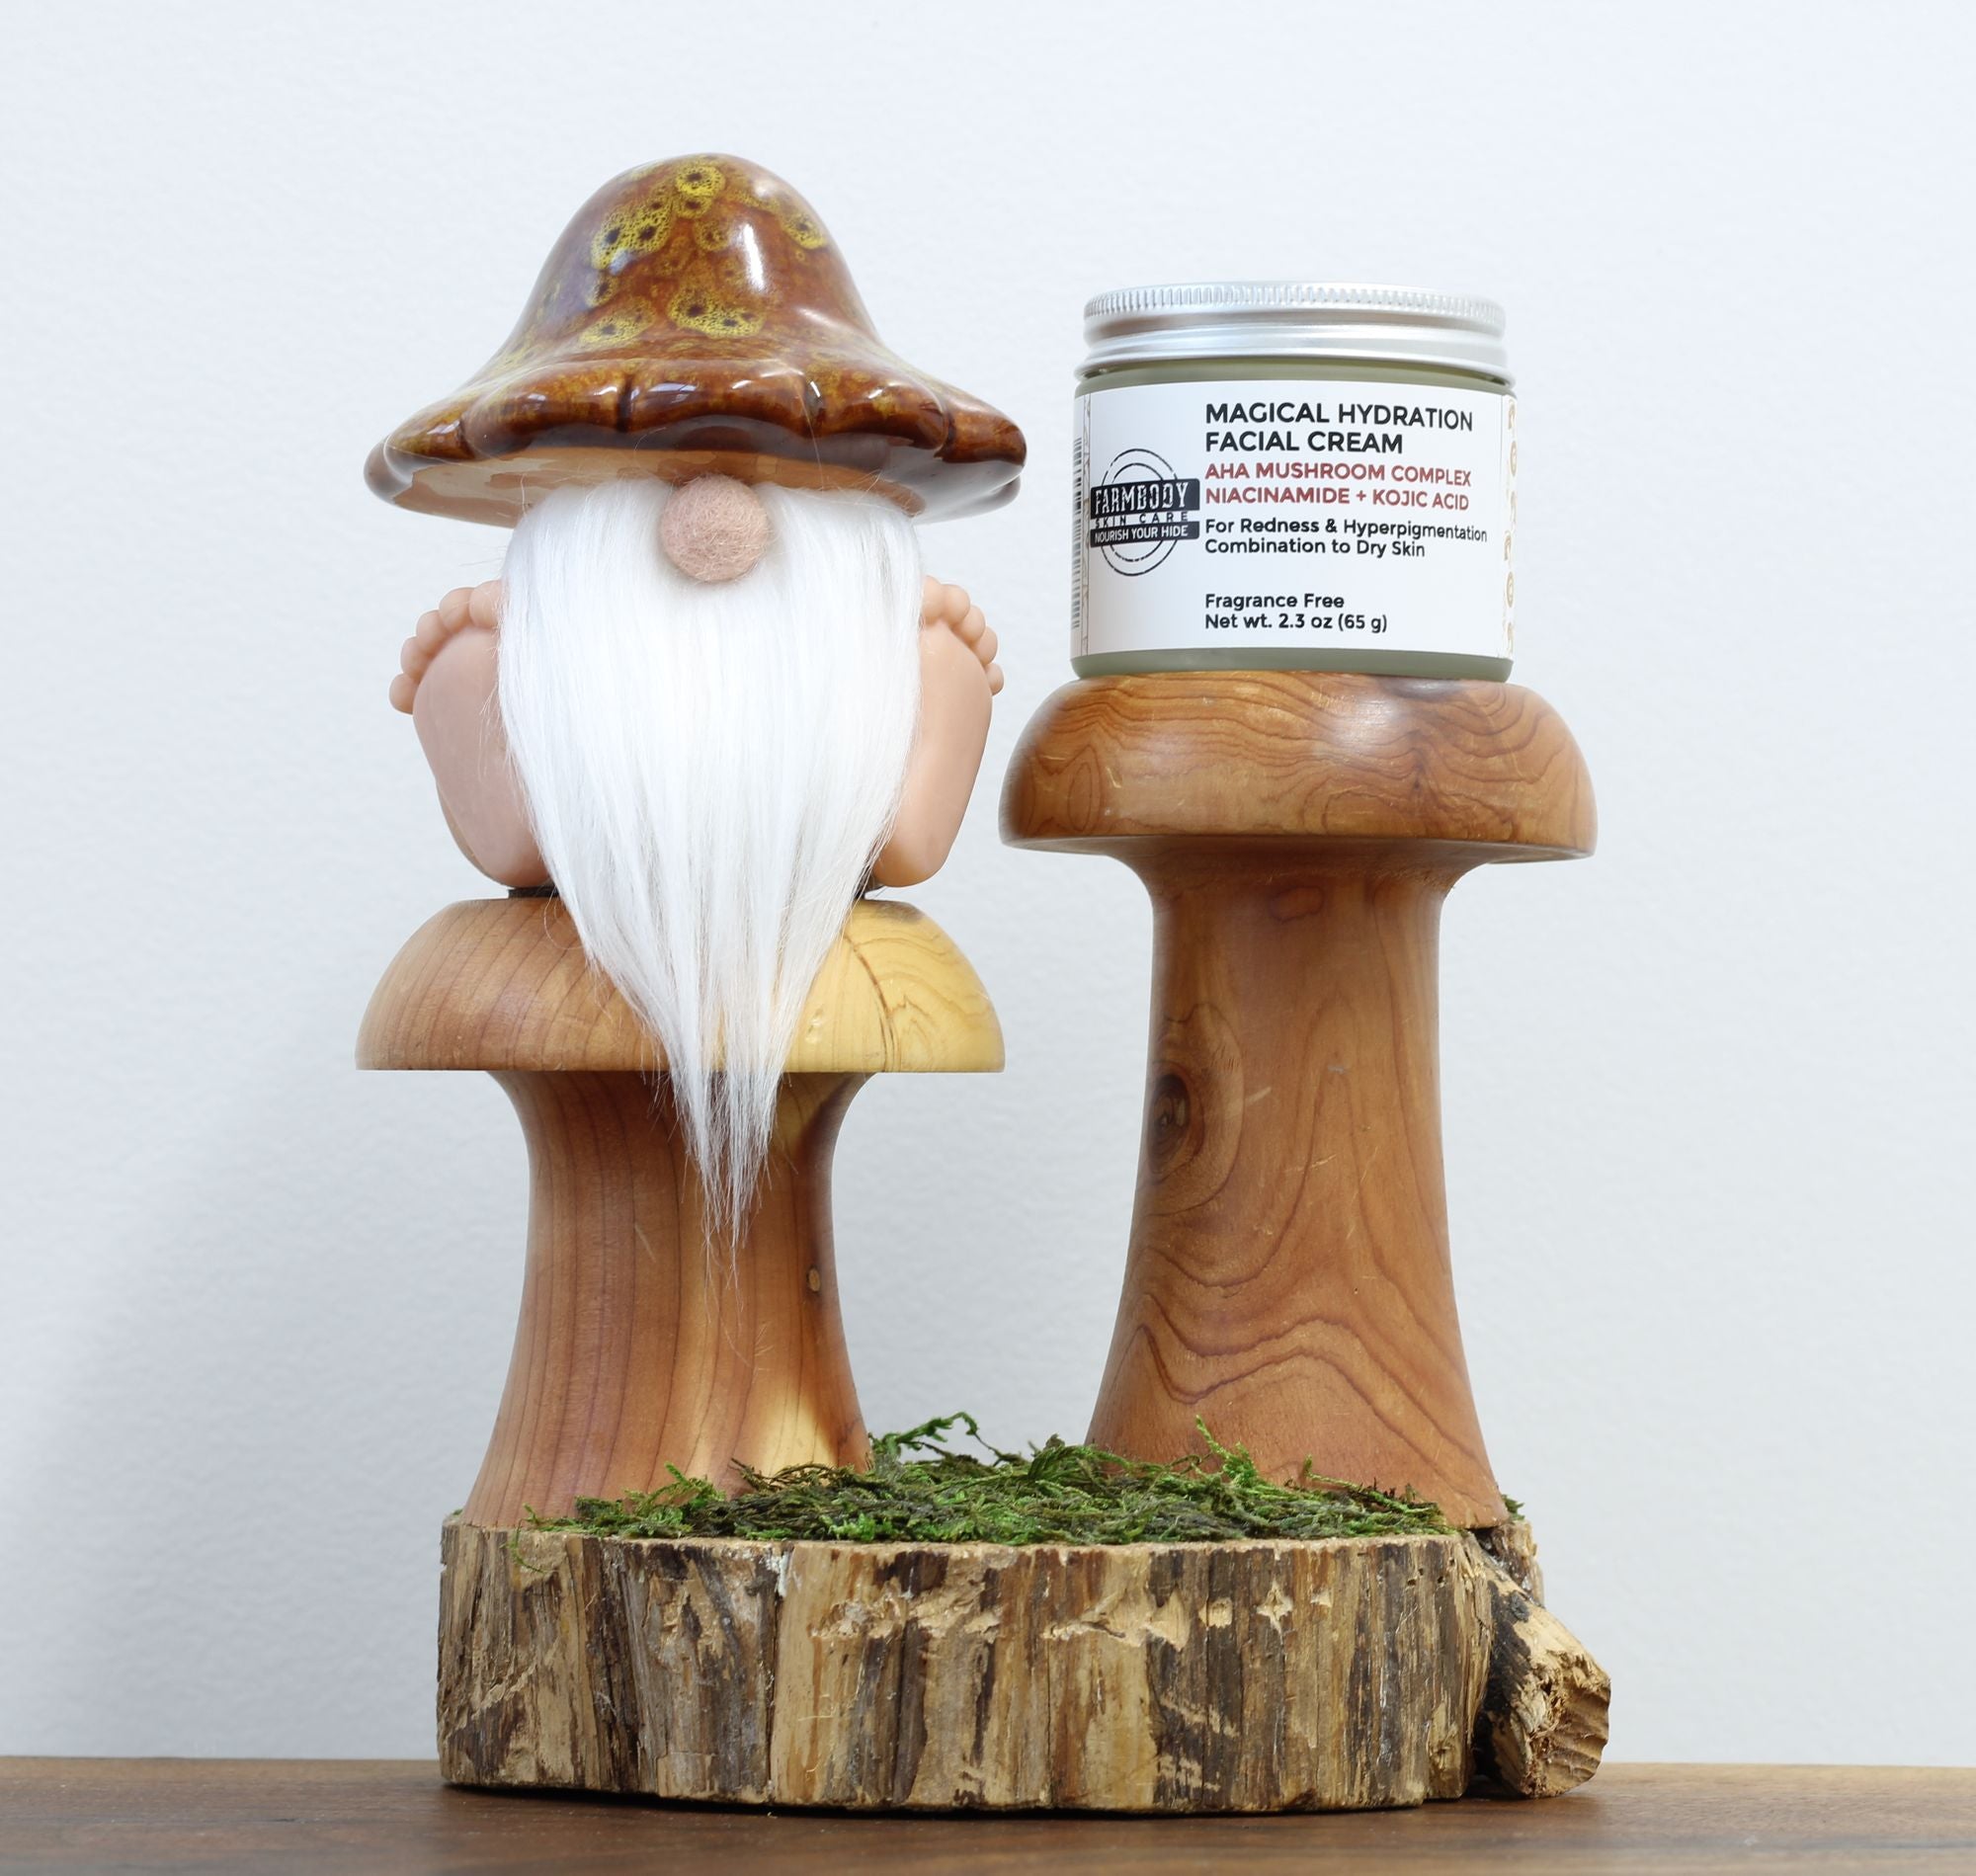 Mushroom Skin Care | Magical Hydration with Kojic Acid